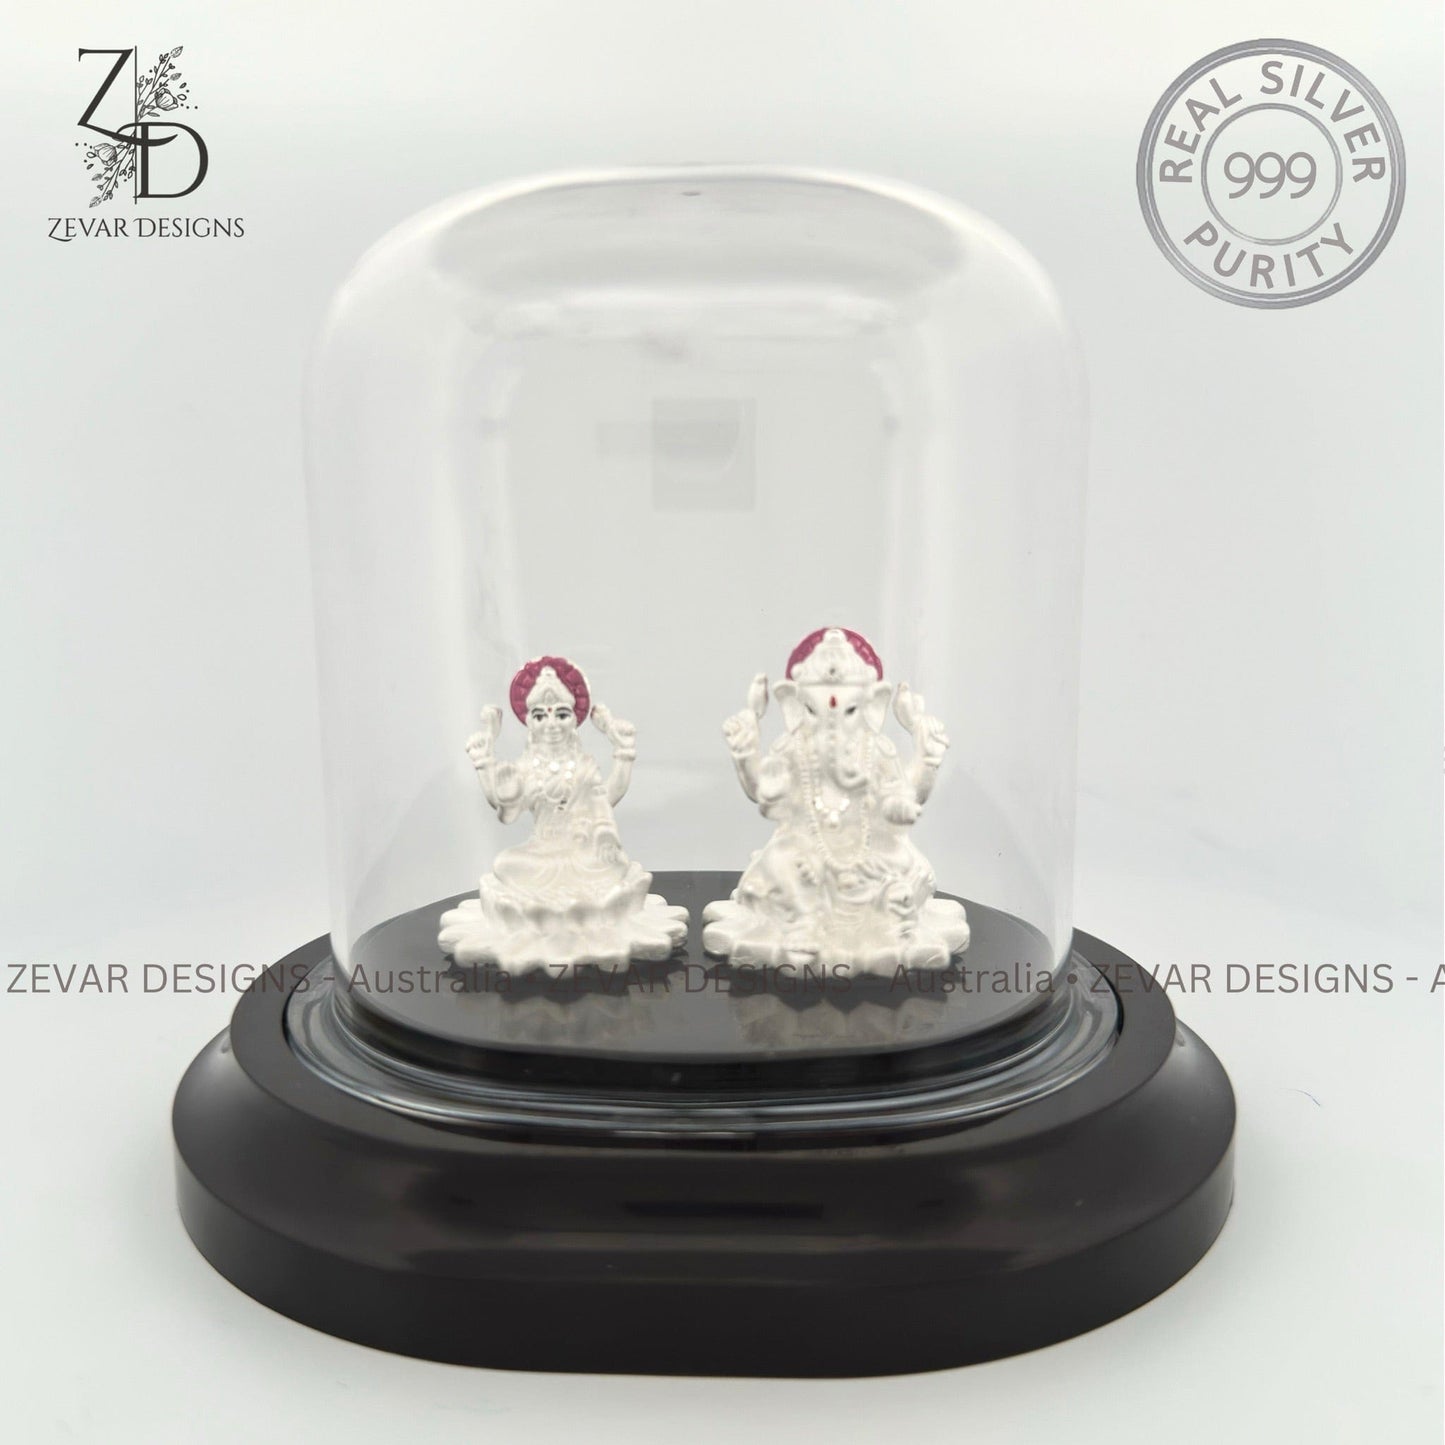 Zevar Designs 925 Silver religious Pure Silver Idol Laxmi ji & Ganesh ji - 999 Purity